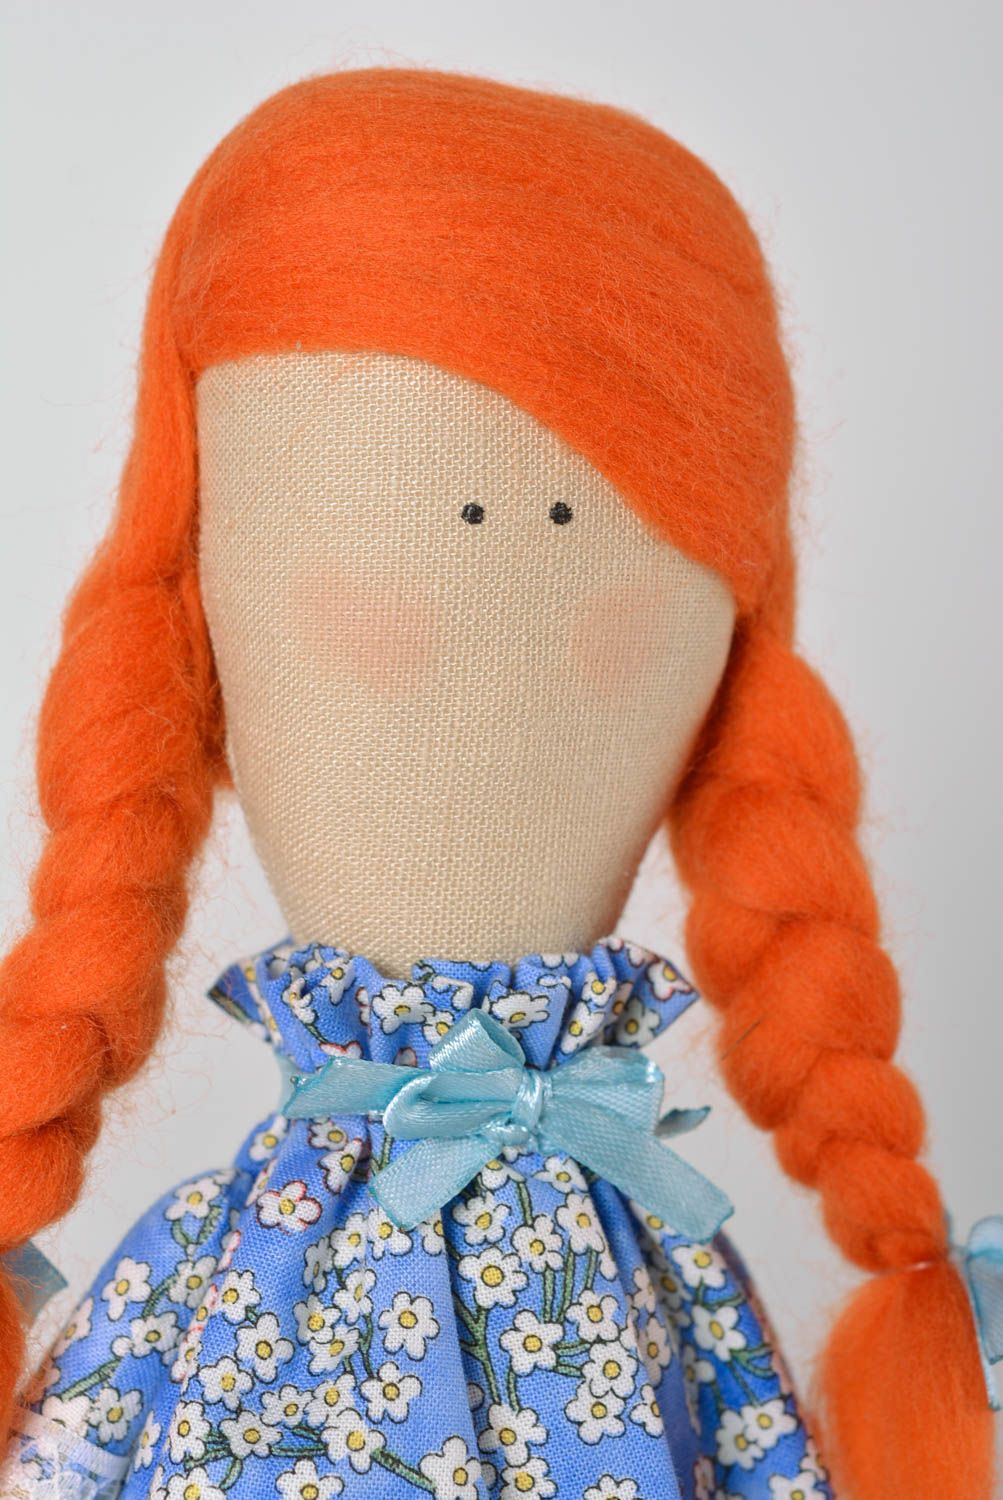 Handmade fabric doll decorative stuffed toy present for children nursery decor photo 2